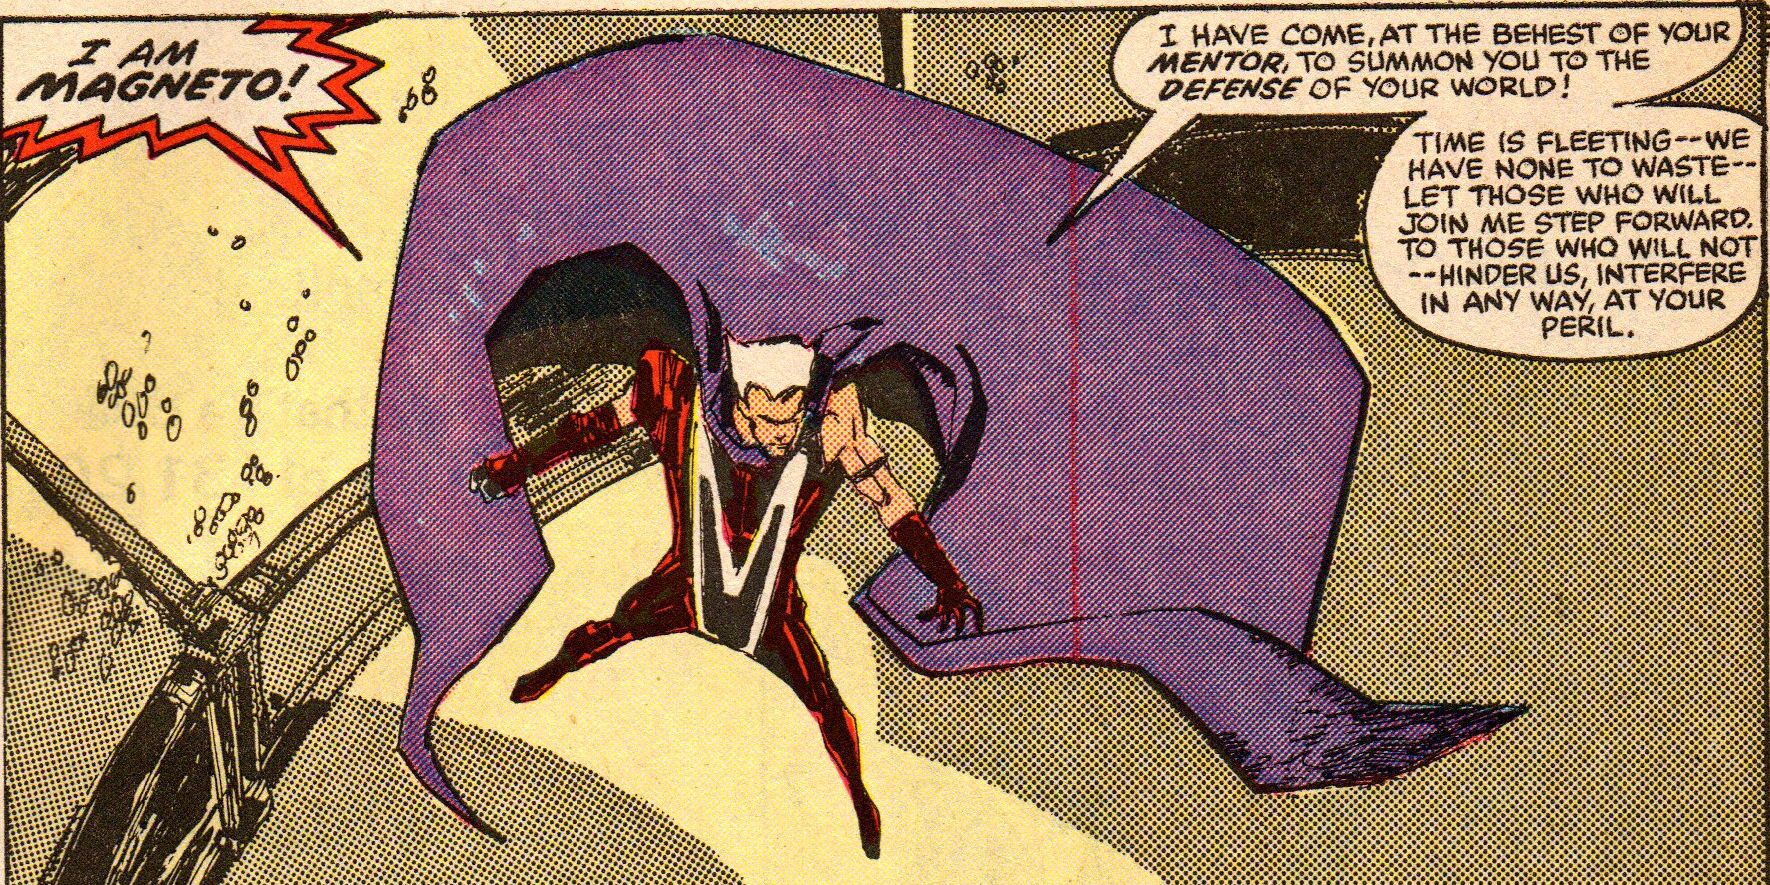 Magneto arrives in New Mutants